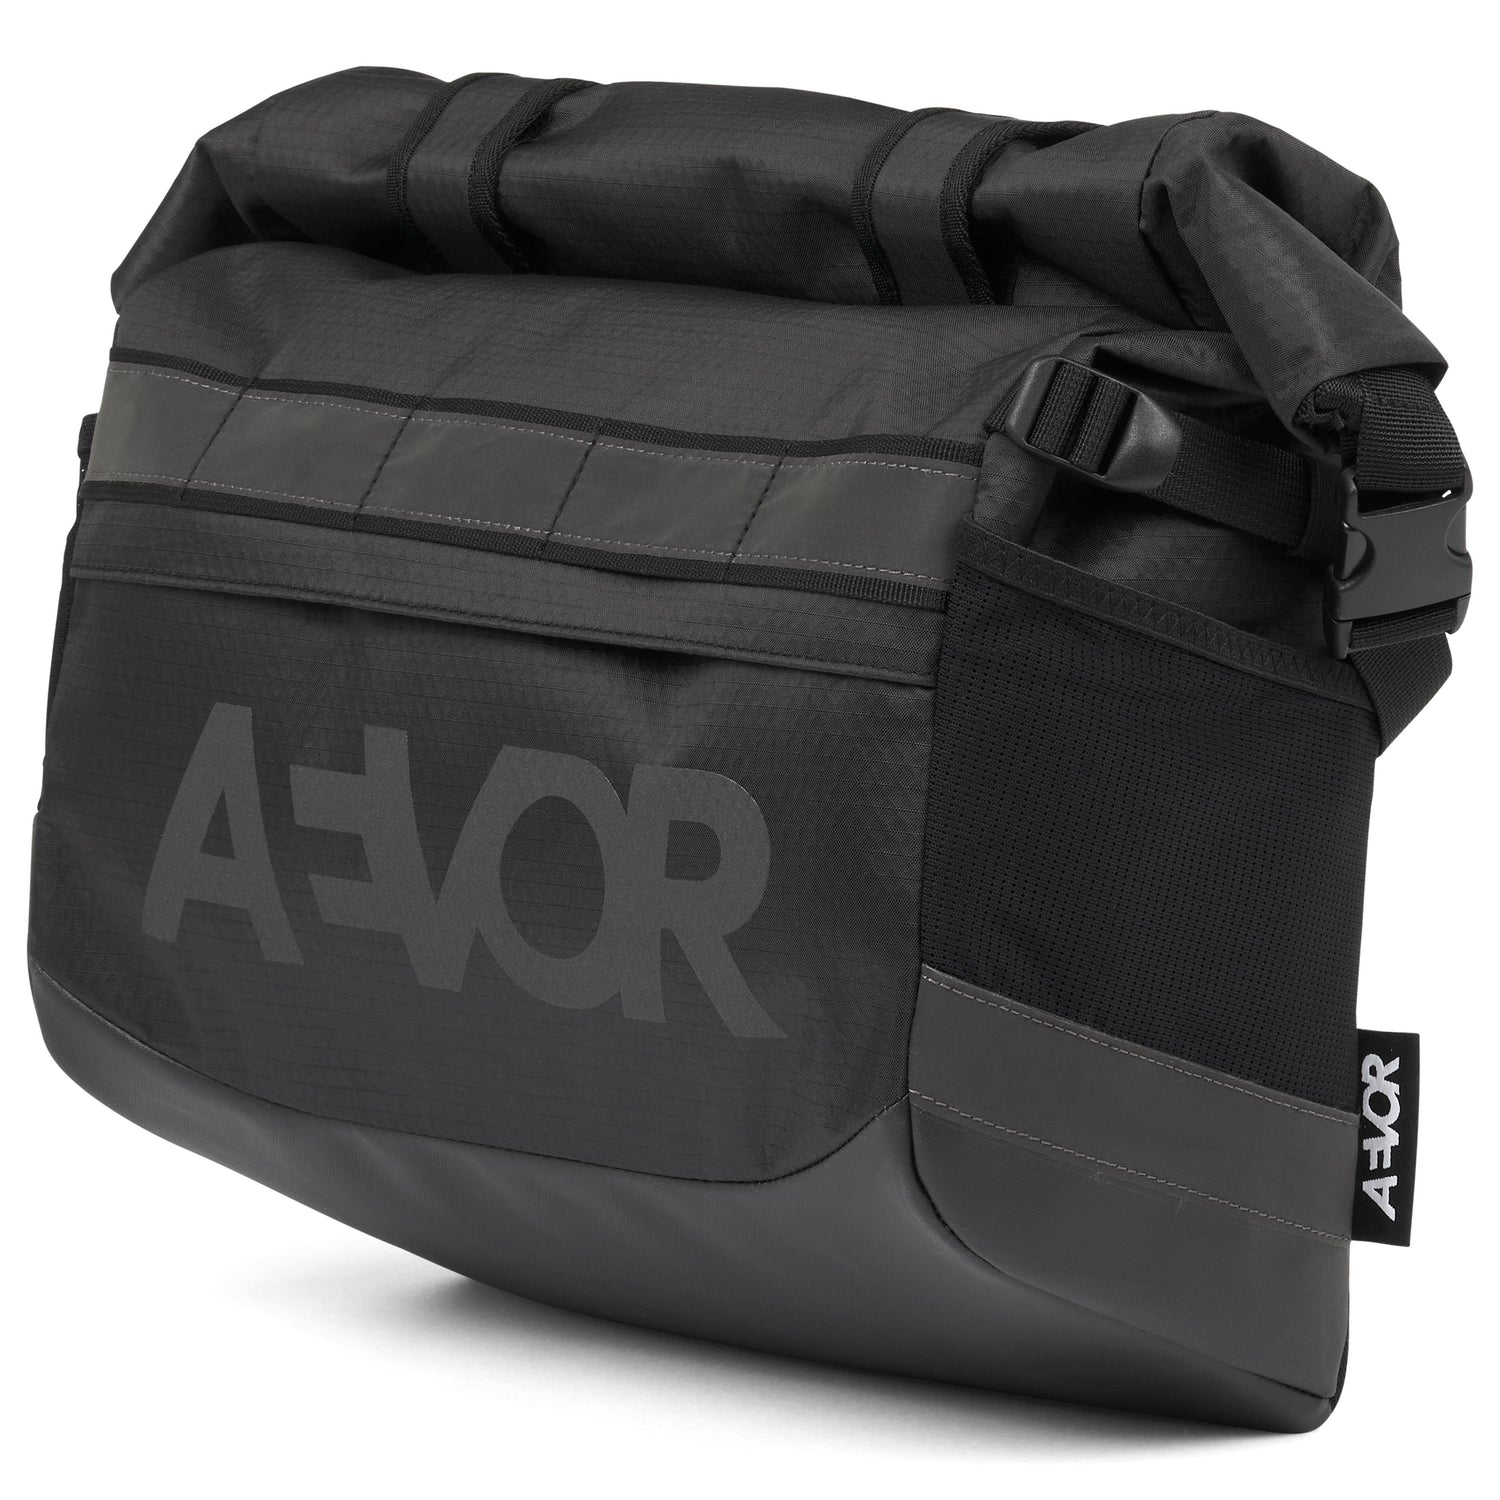 Aevor Triple Bike Bag Proof - 100% Recycled PET Black Bags